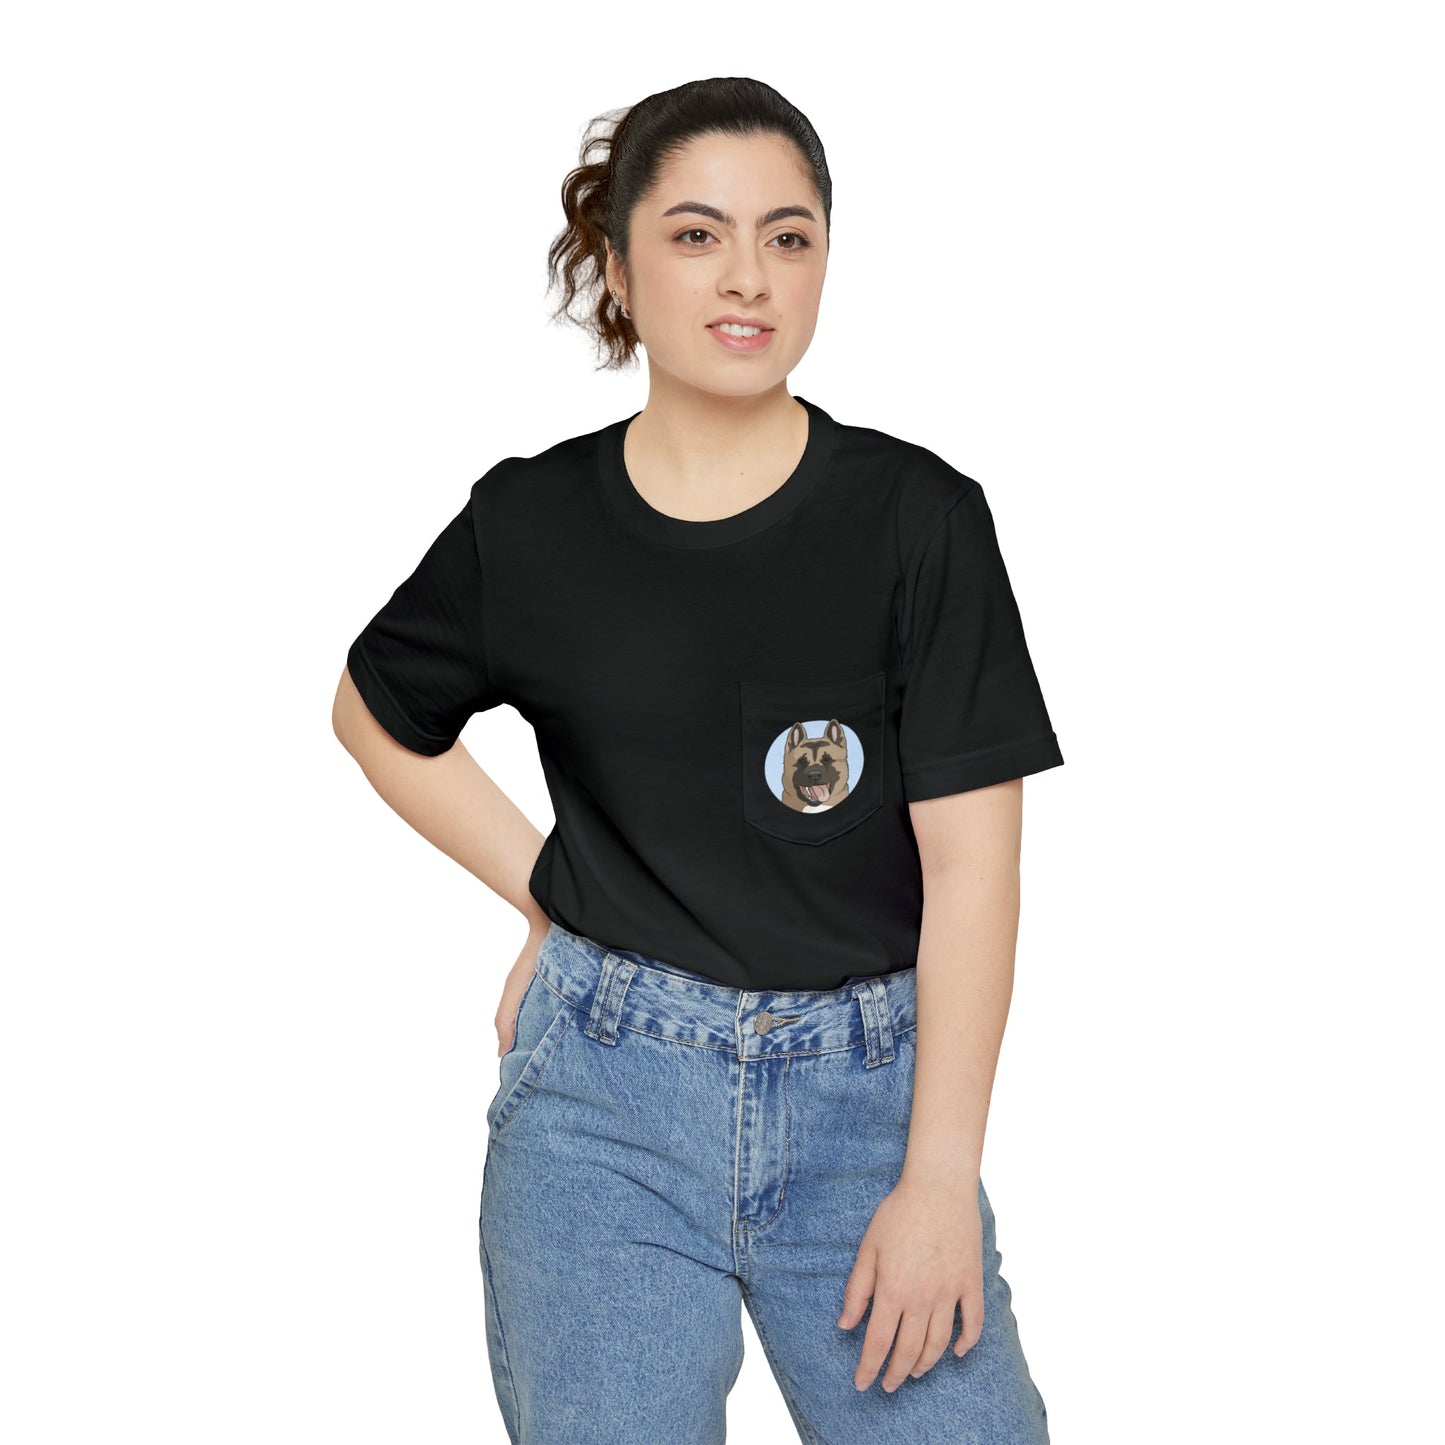 Akita | Pocket T-shirt - Detezi Designs-15670750551905547802